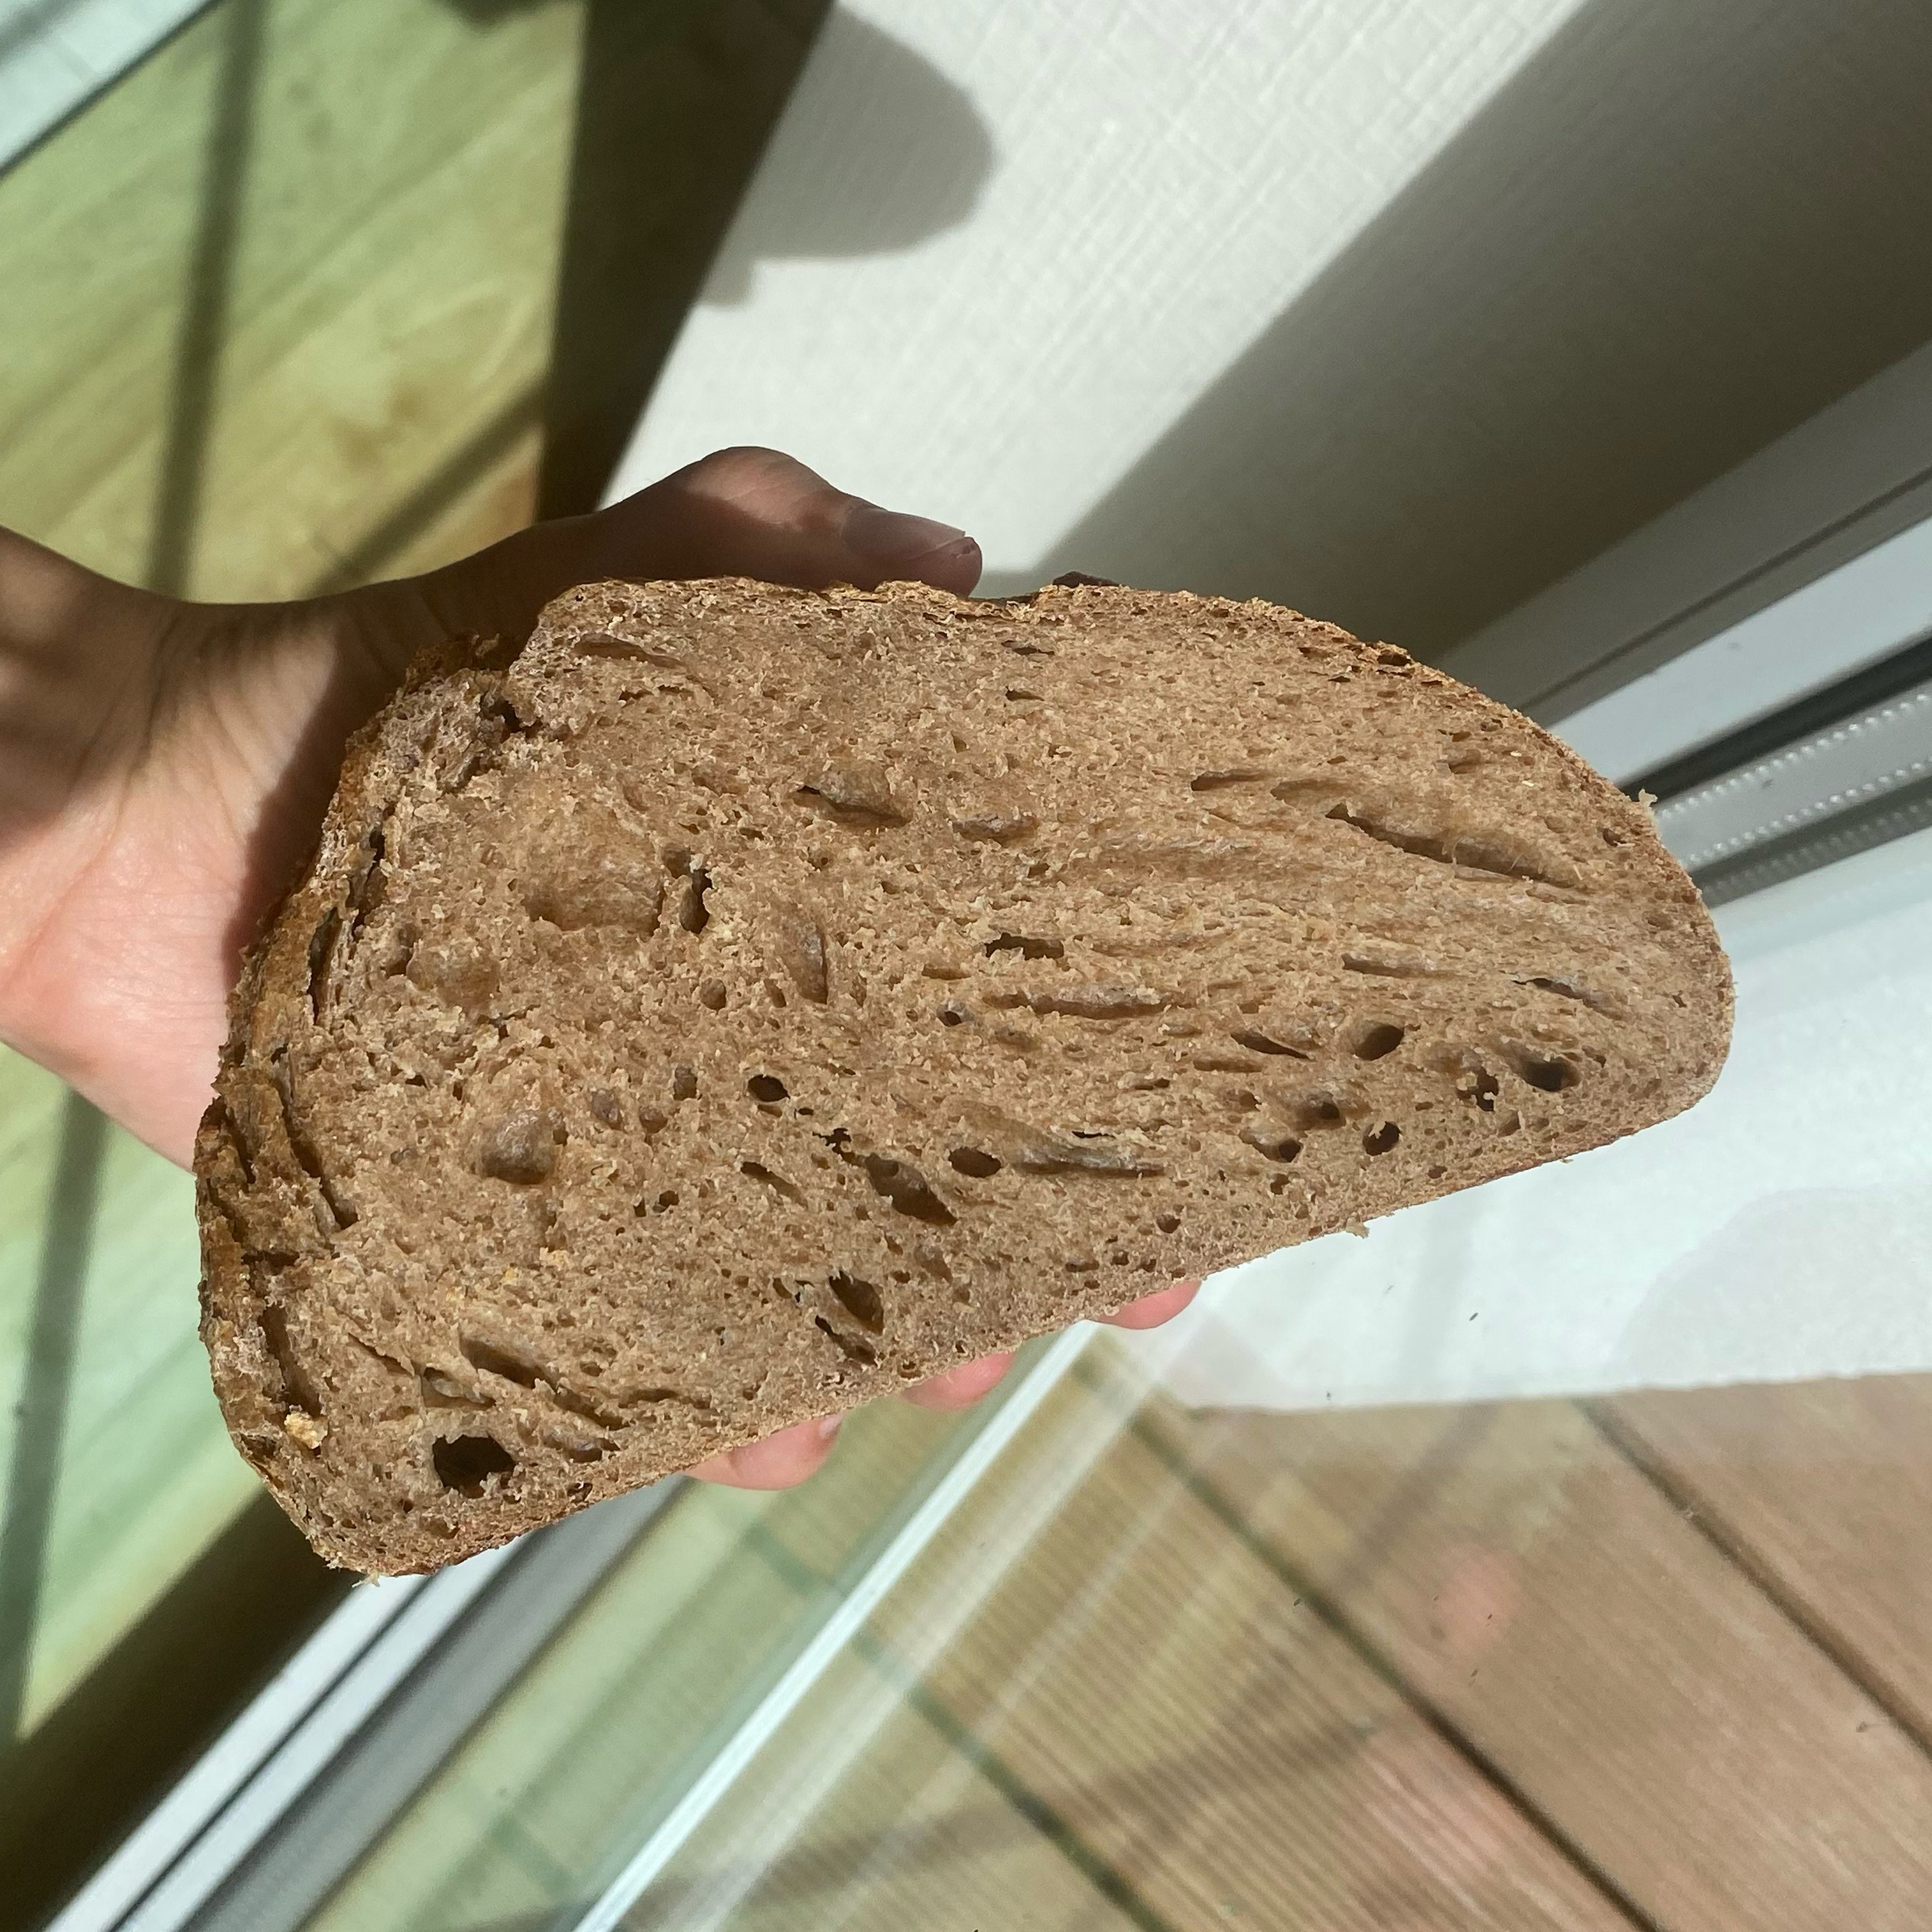 spelt sourdough bread